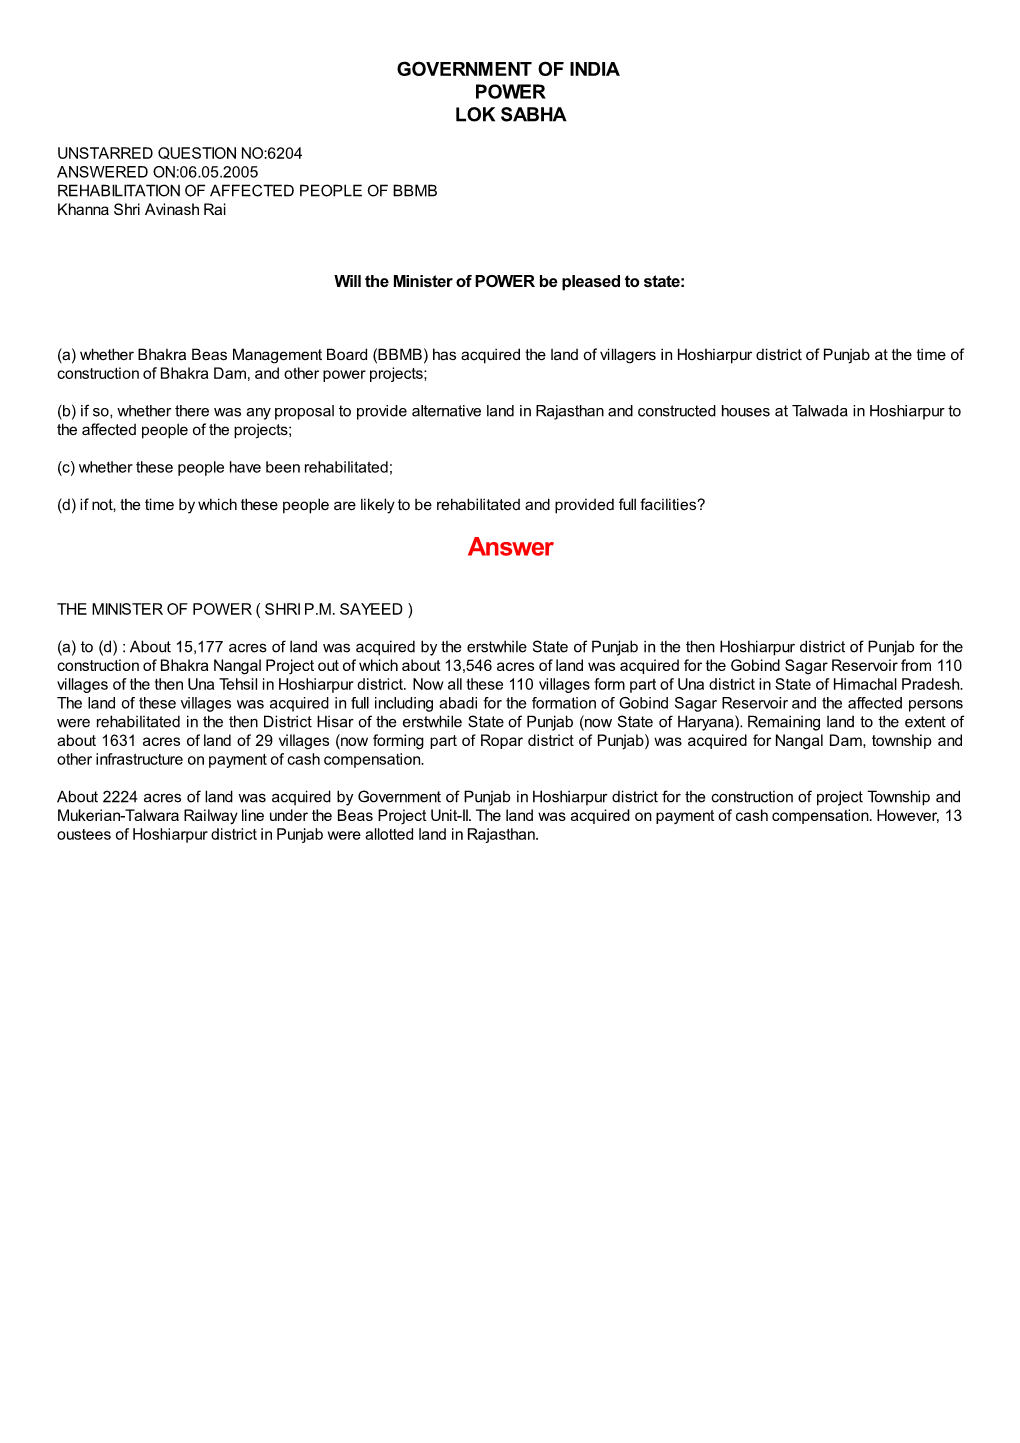 ANSWERED ON:06.05.2005 REHABILITATION of AFFECTED PEOPLE of BBMB Khanna Shri Avinash Rai